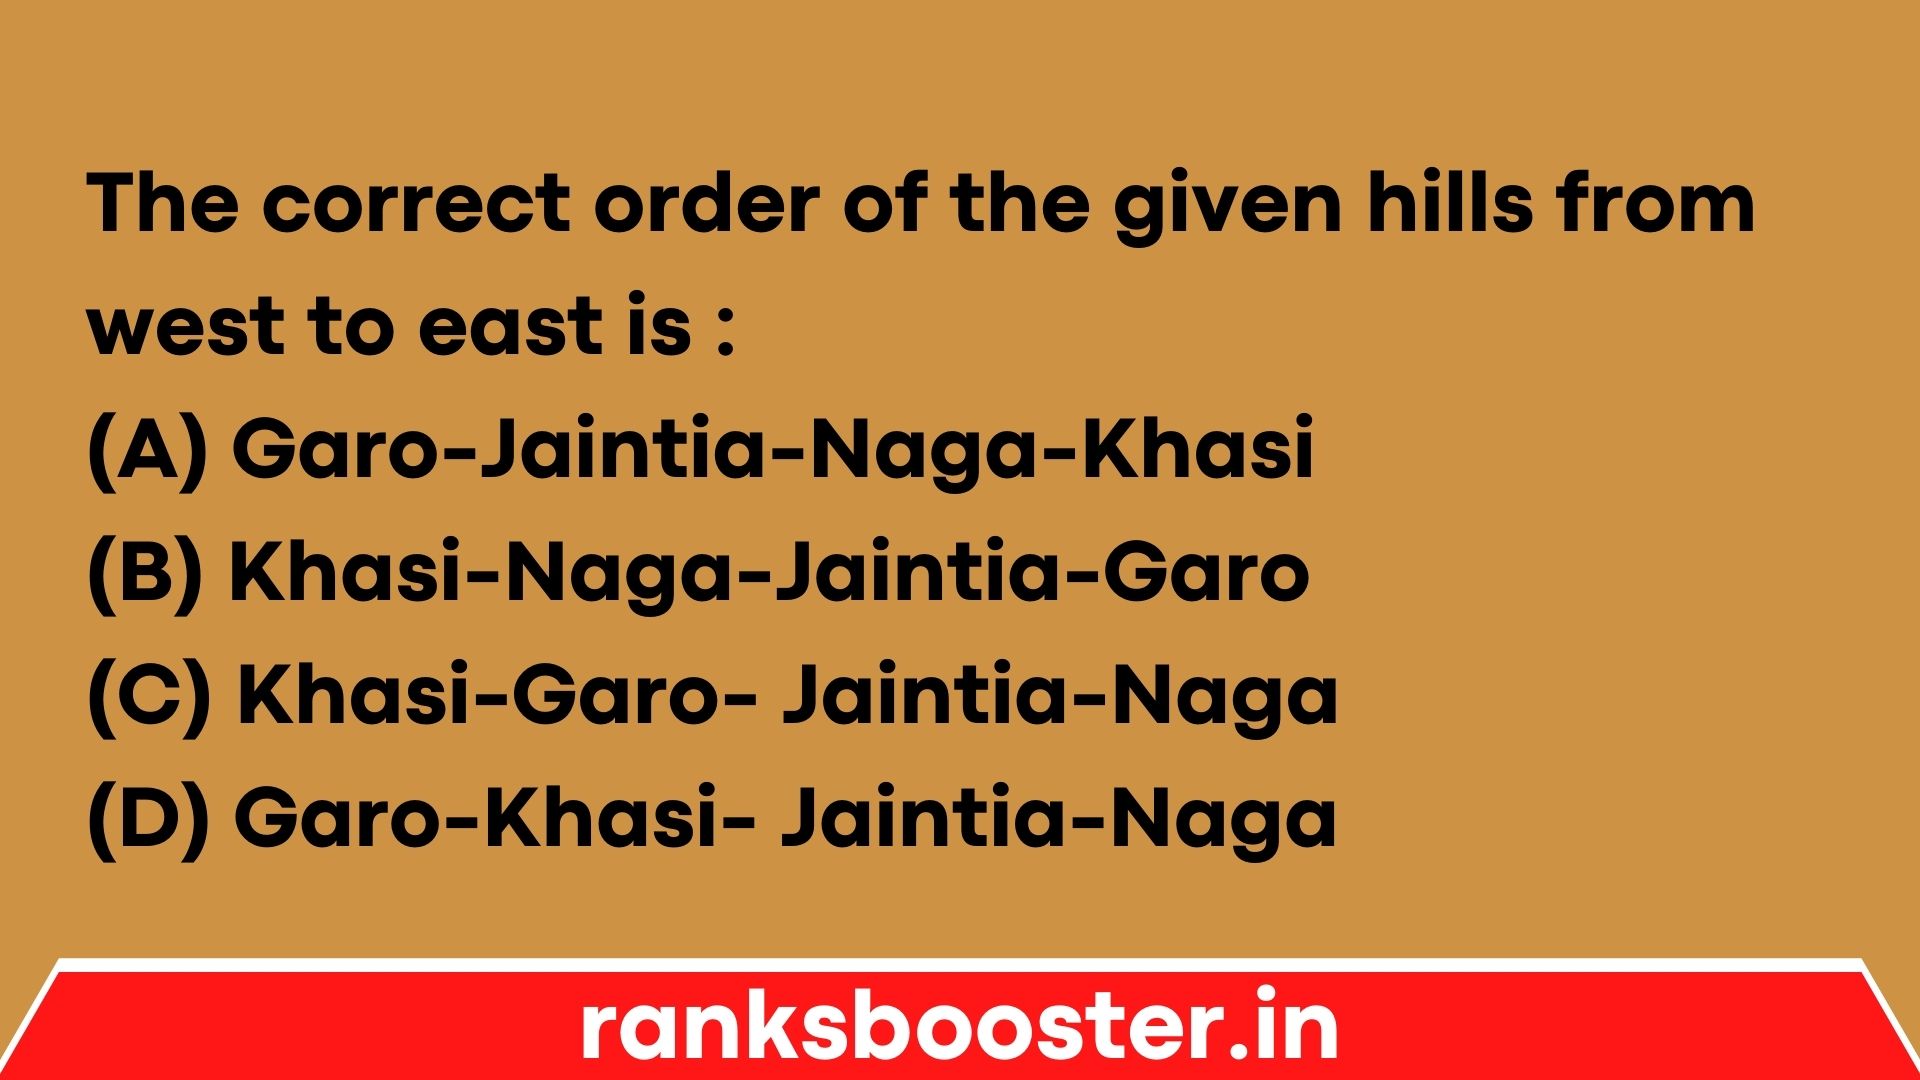 The correct order of the given hills from west to east is : (A) Garo-Jaintia-Naga-Khasi (B) Khasi-Naga-Jaintia-Garo (C) Khasi-Garo- Jaintia-Naga (D) Garo-Khasi- Jaintia-Naga